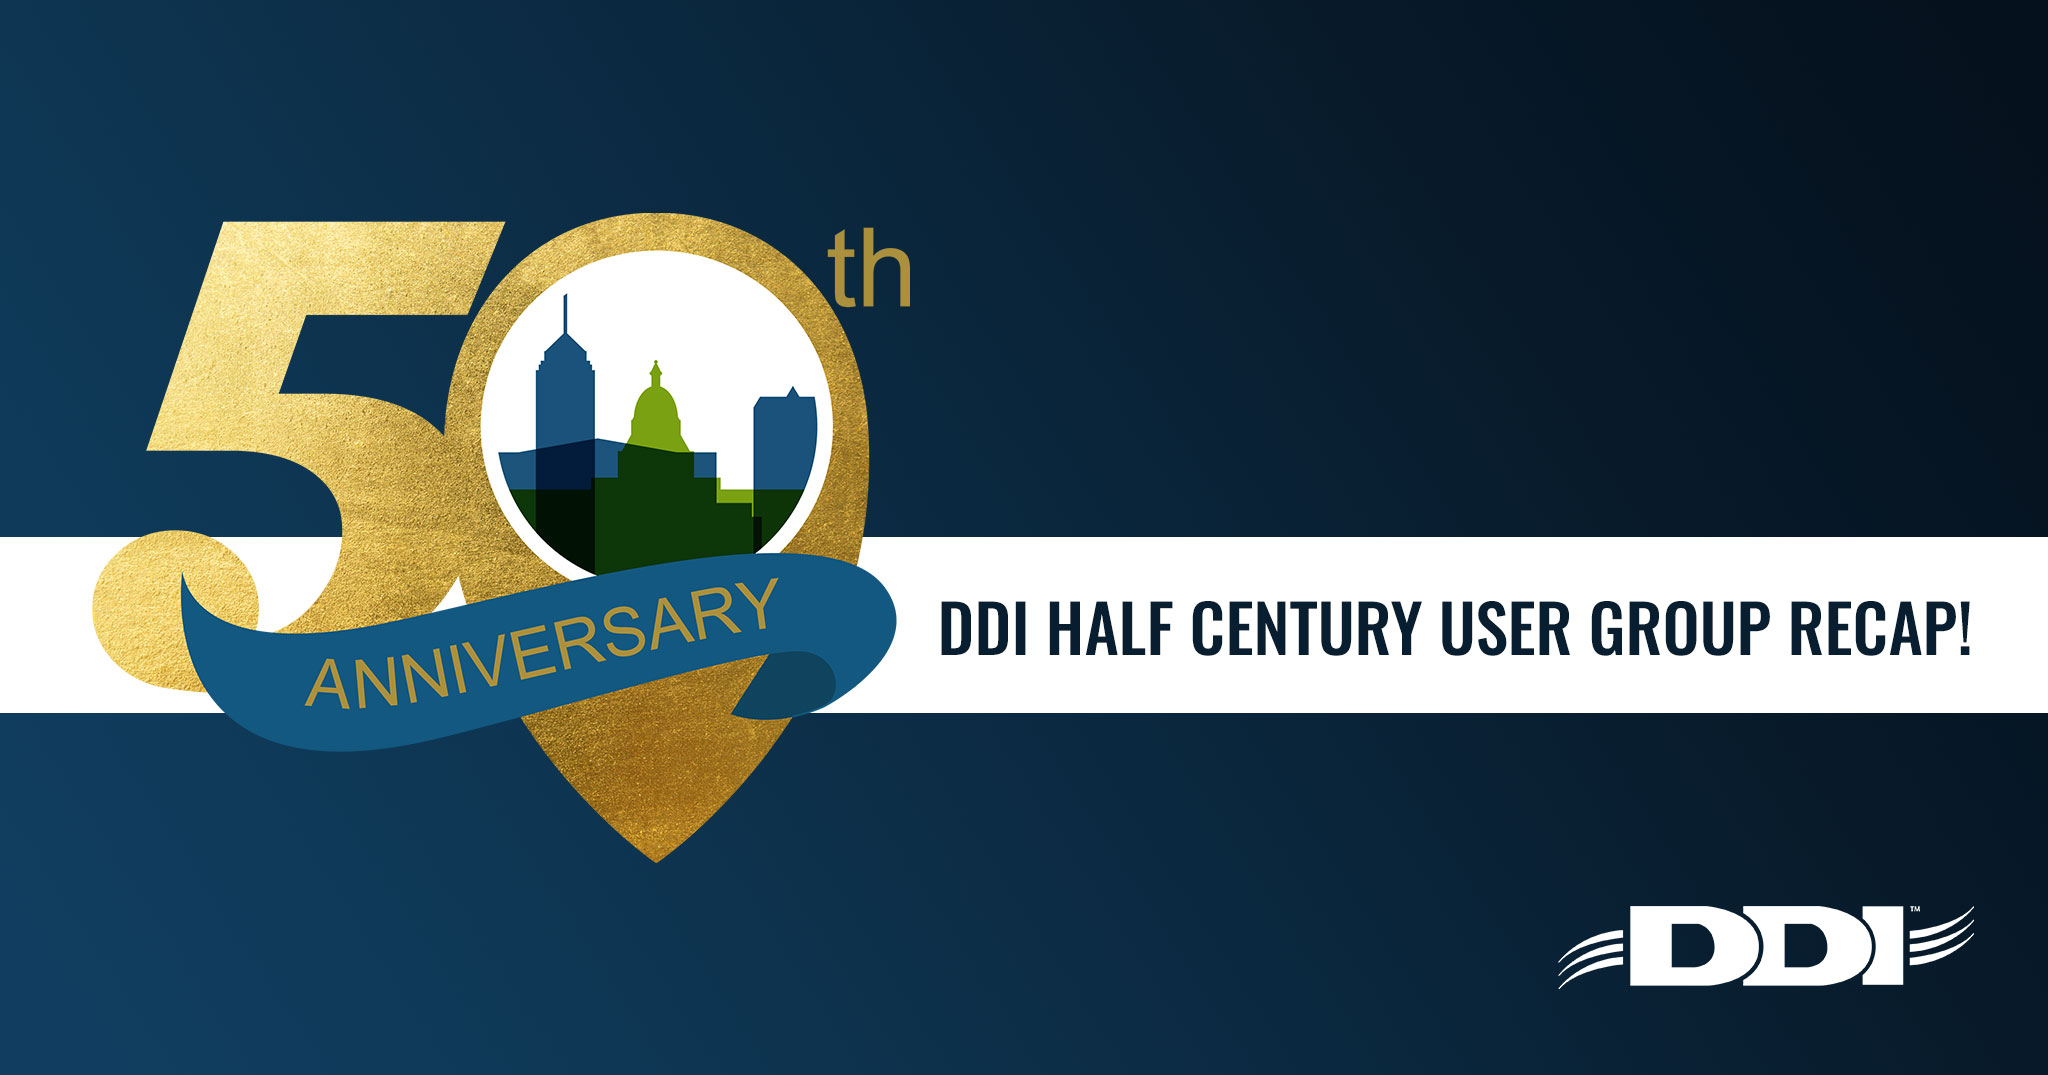 DDI Half Century User Group Recap